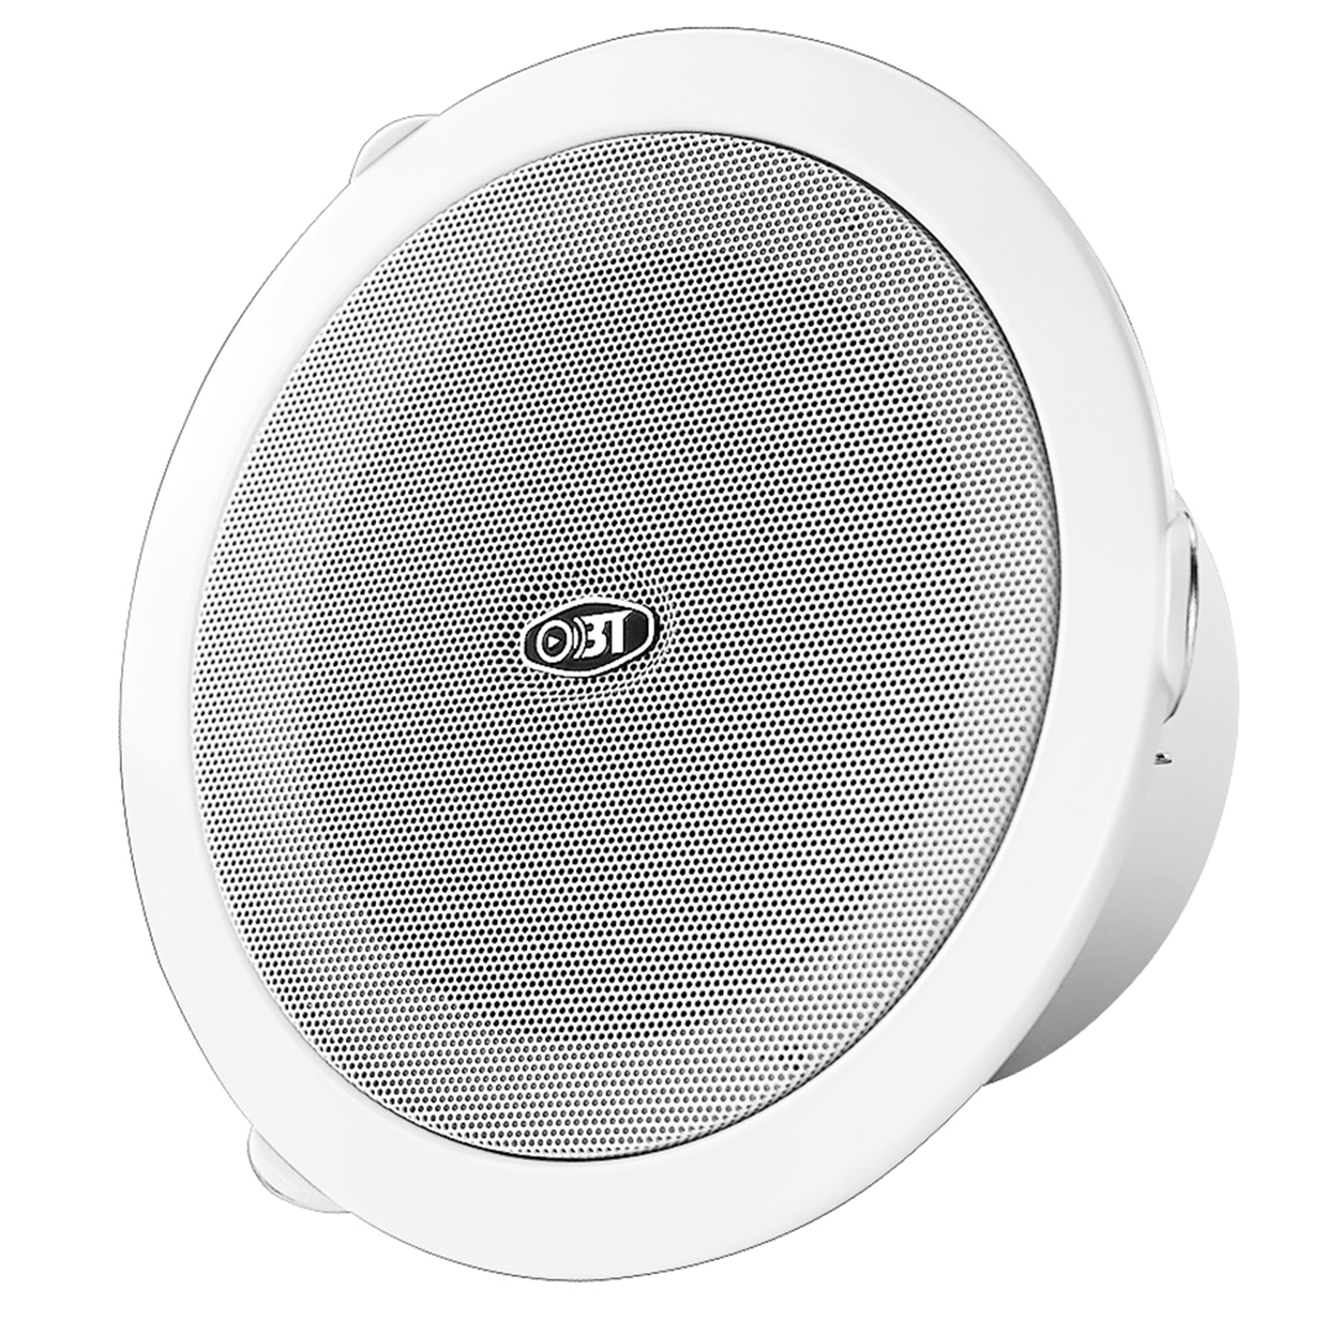 SIP voip speaker manufacturers